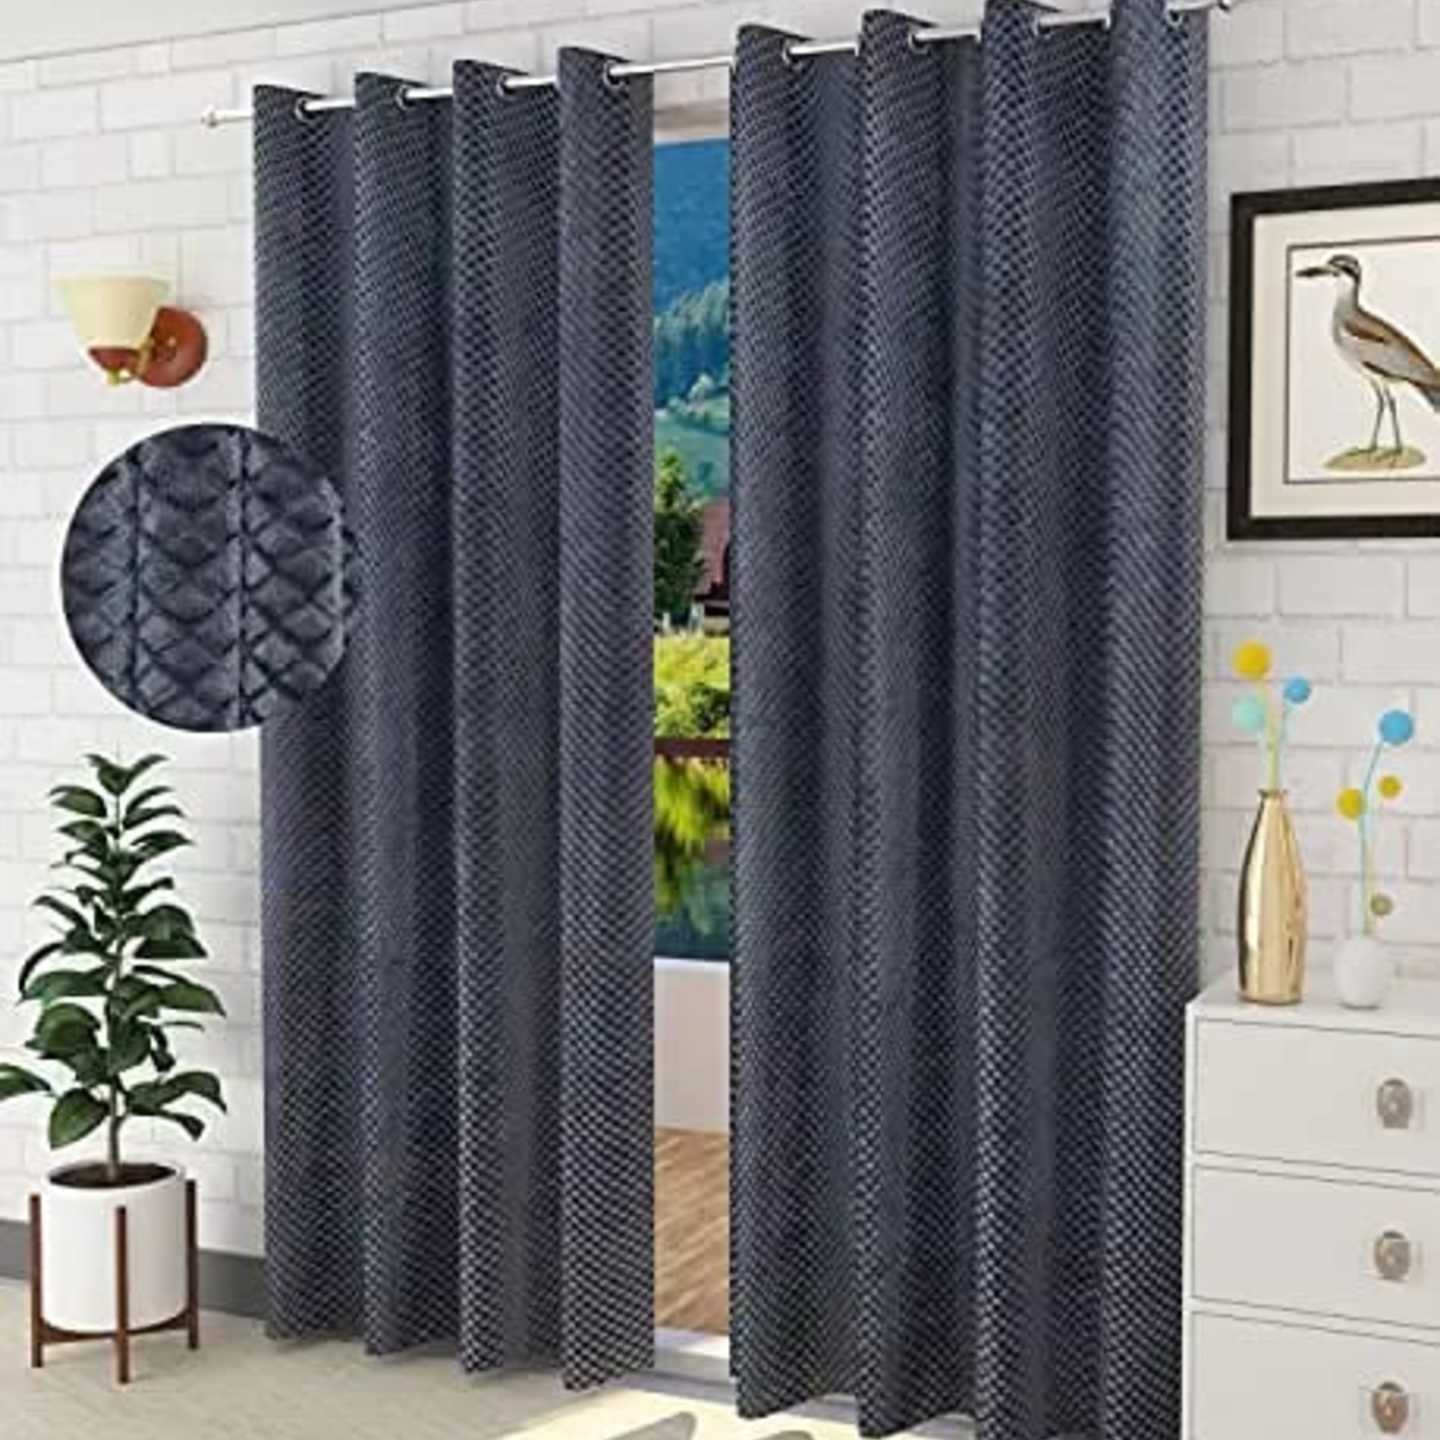 Handtex Home Heavy Velvet Room Darkening Self Design Blackout Curtain 4x7 feet Set of 2 Grey